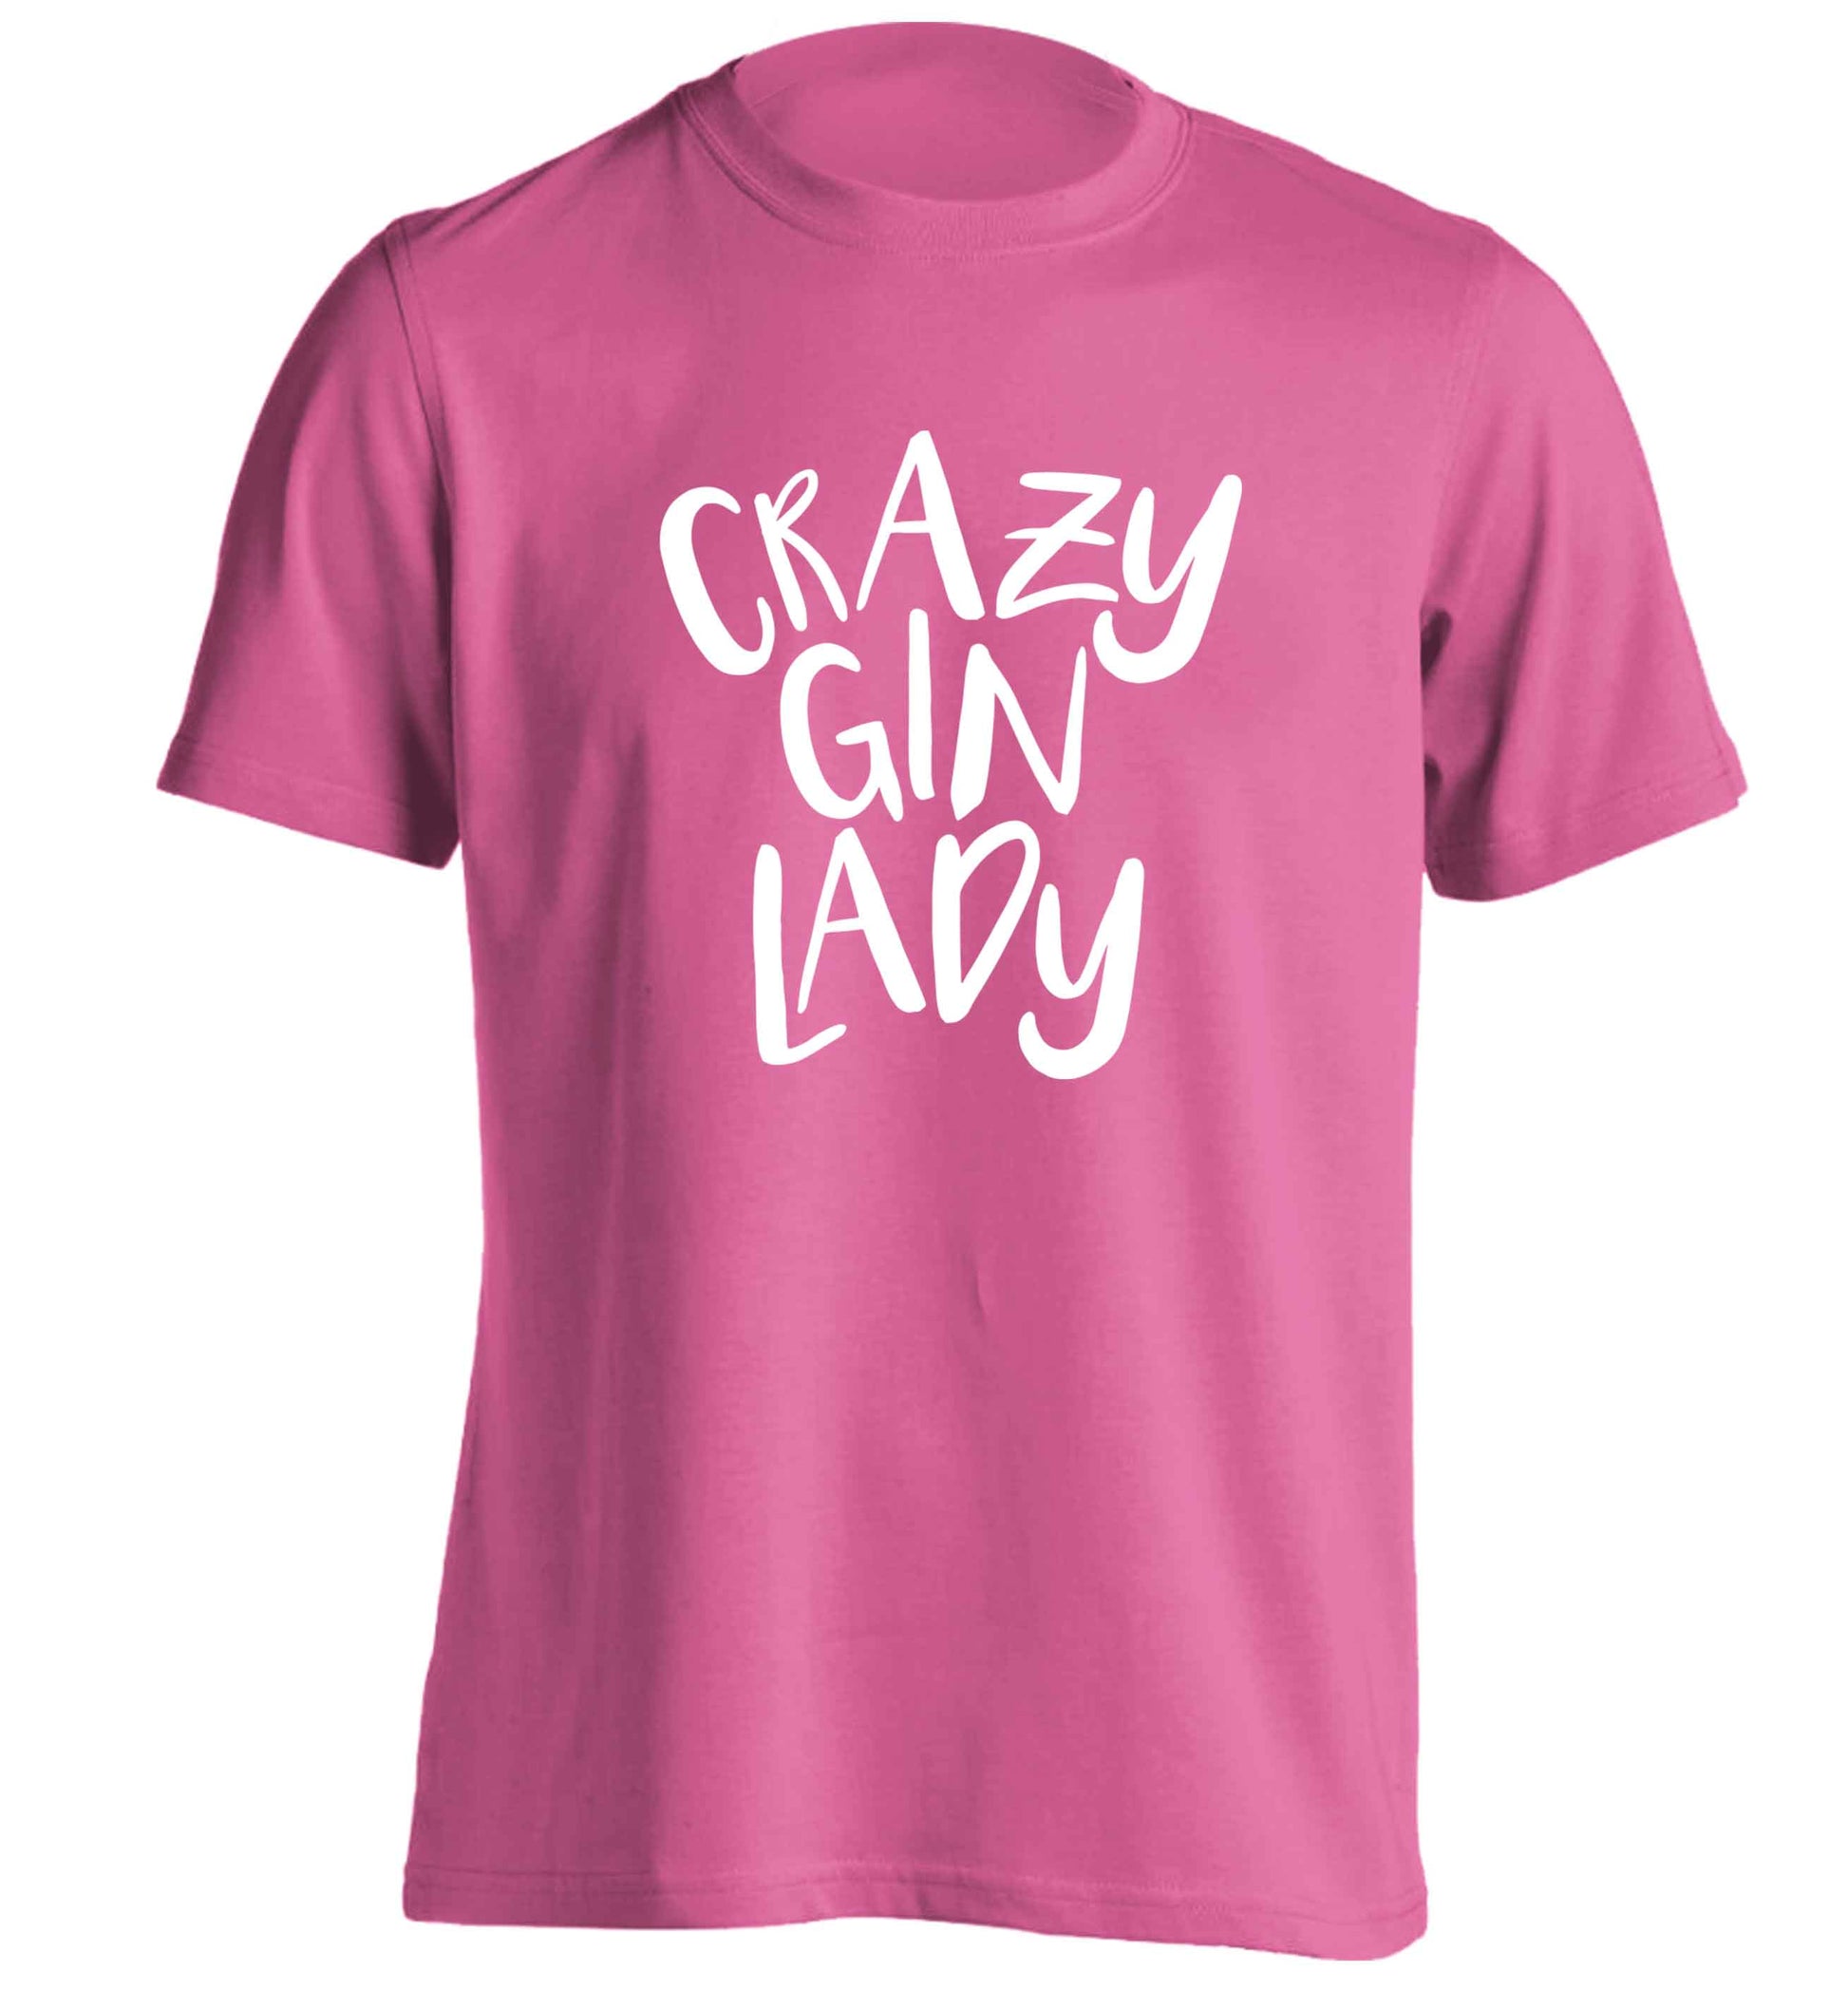 Crazy gin lady adults unisex pink Tshirt 2XL